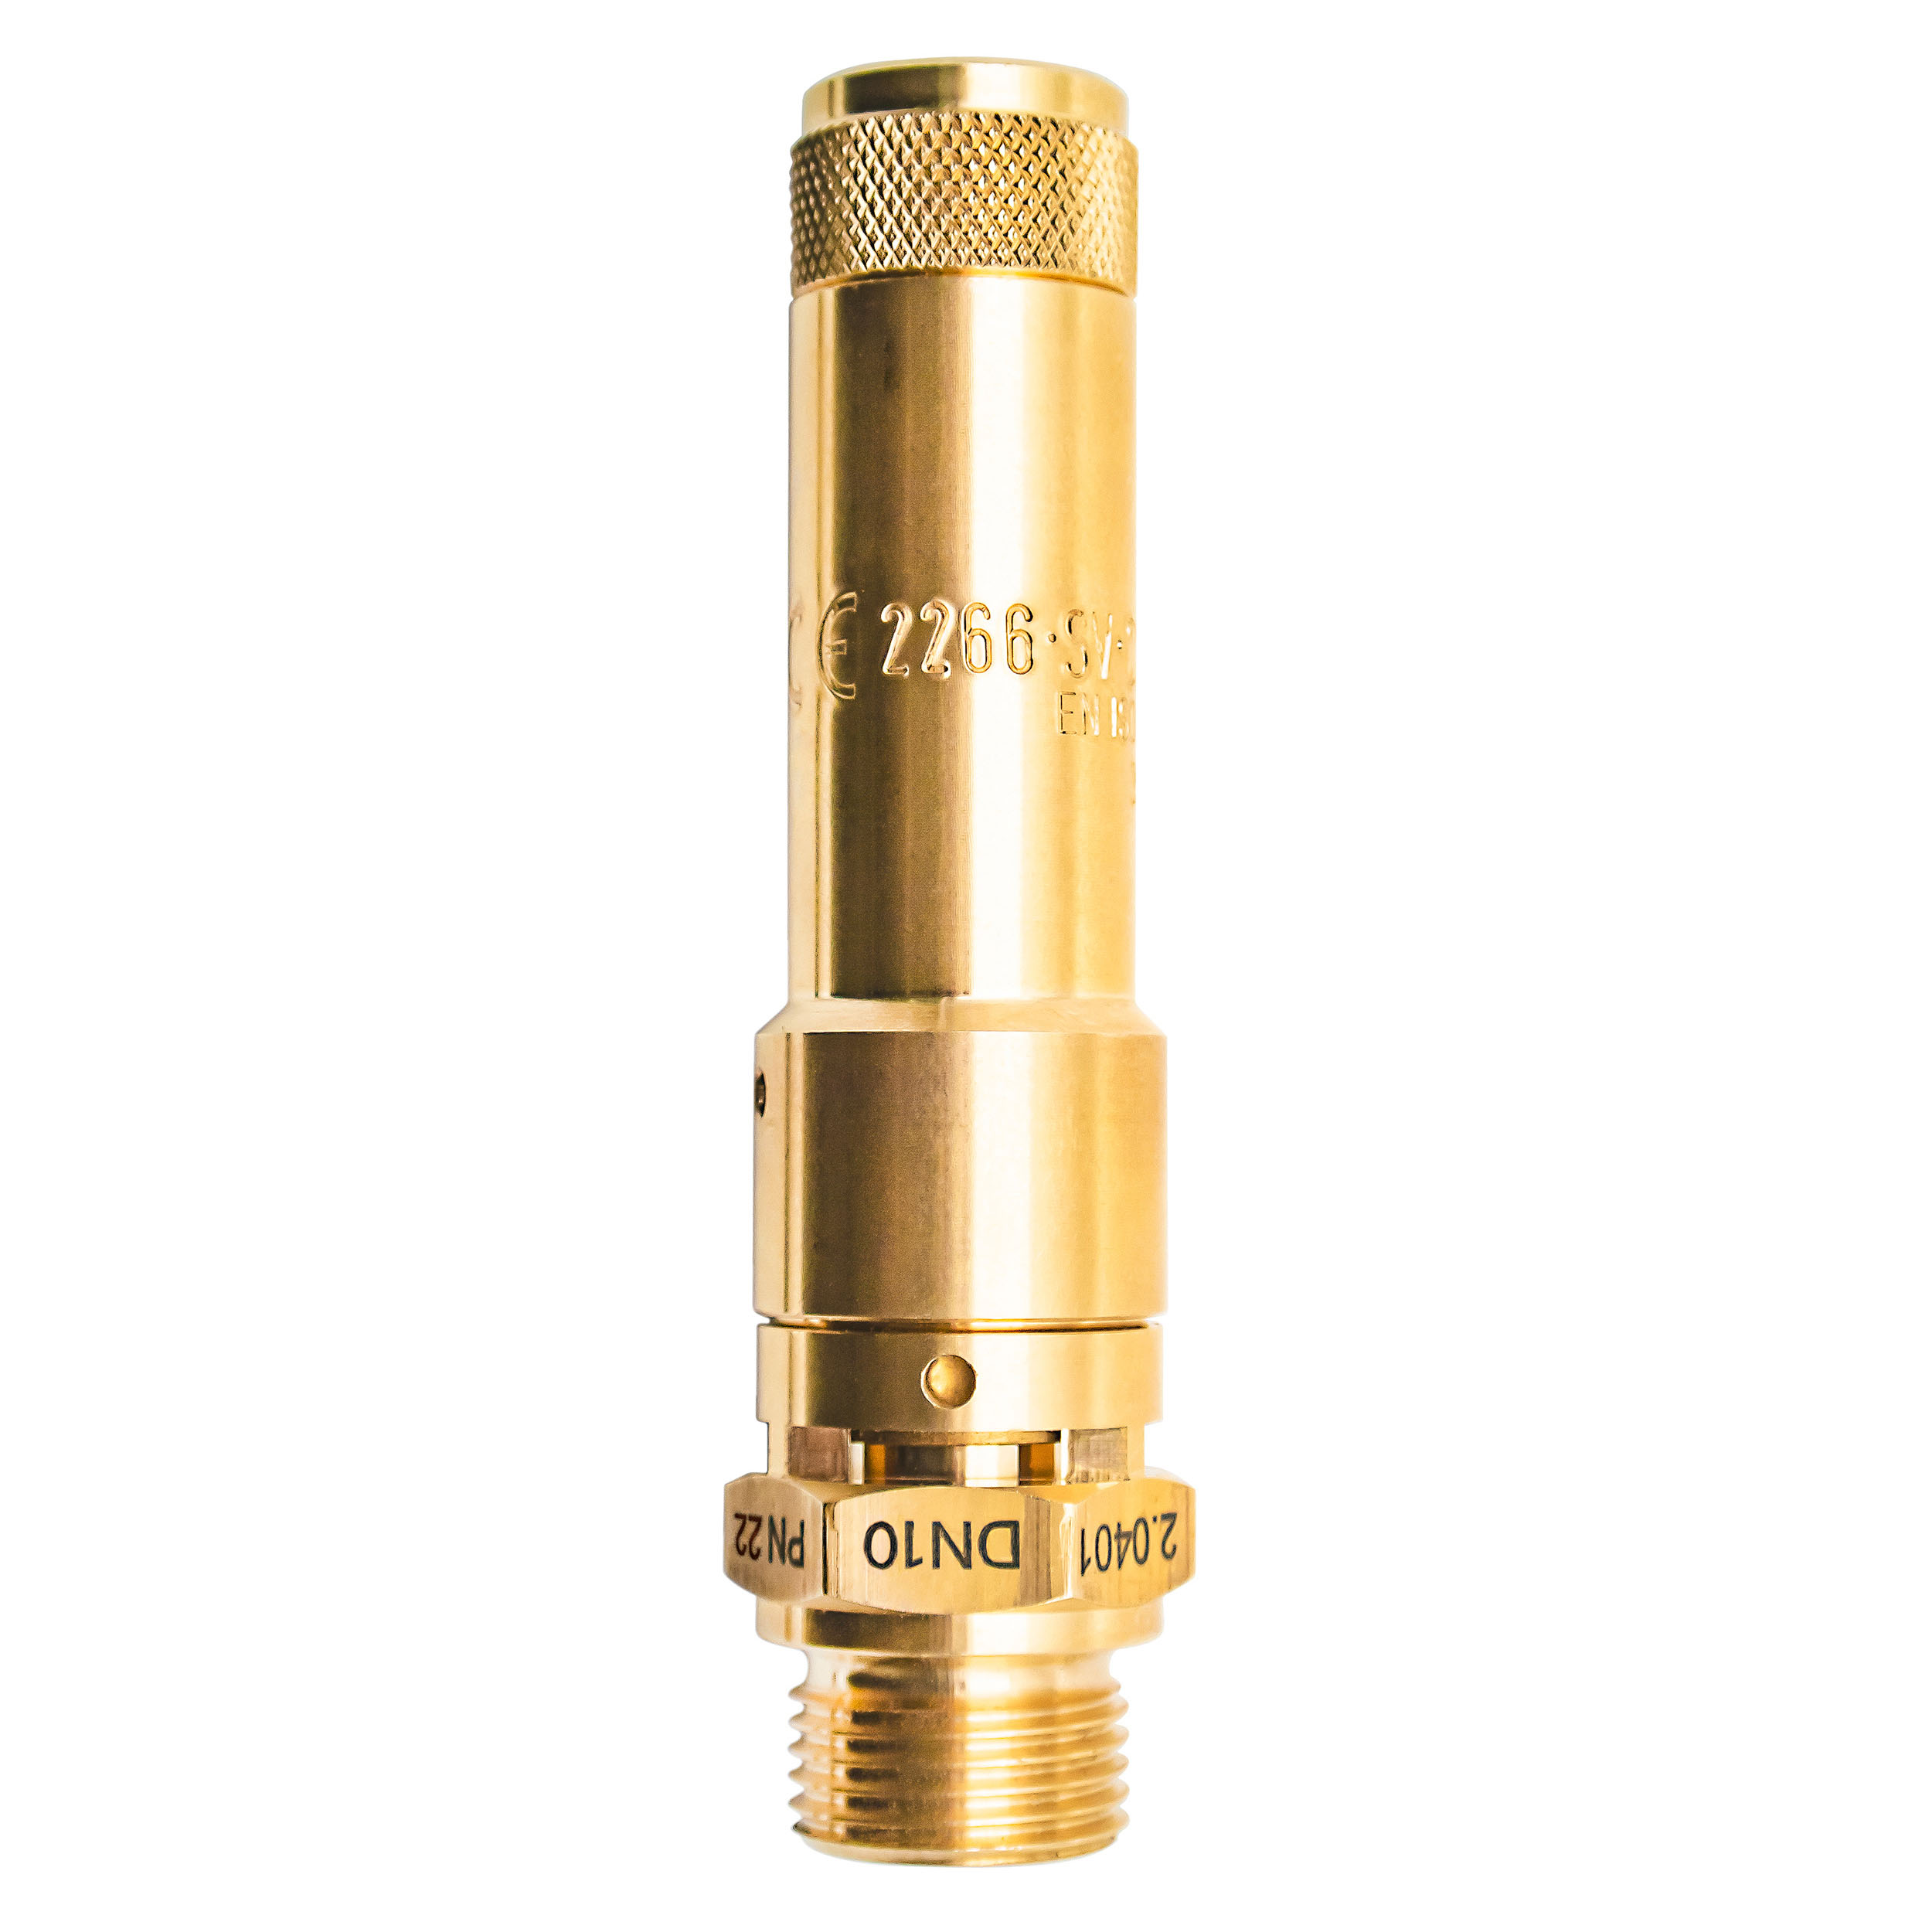 Savety valve component tested DN 10, G½, set pressure: 15.0 bar (217,5 psi)